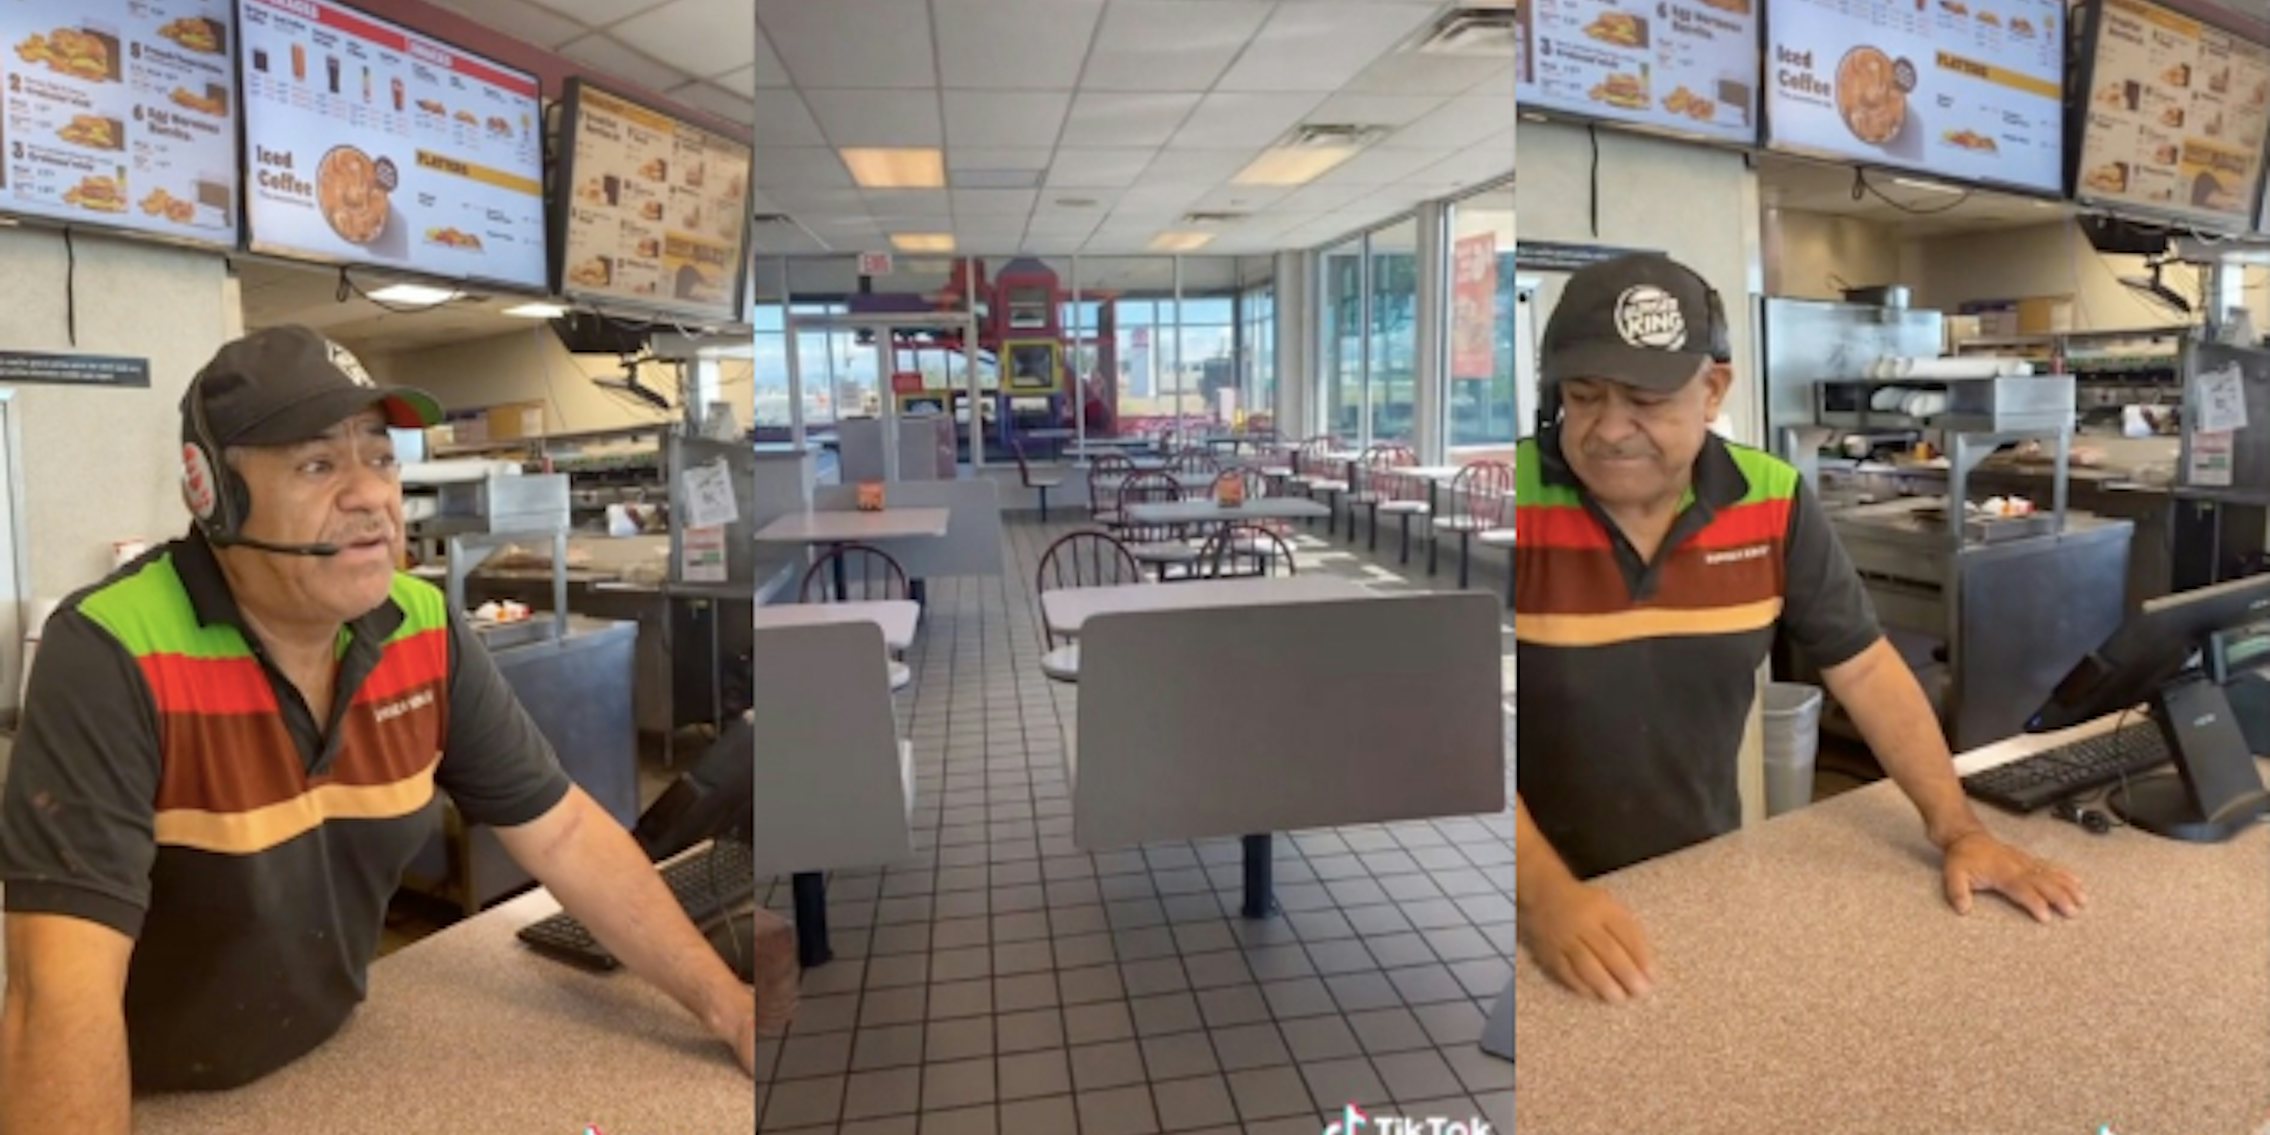 Burger King employee at counter (l) Burger King interior (c) Burger King employee at counter (r)